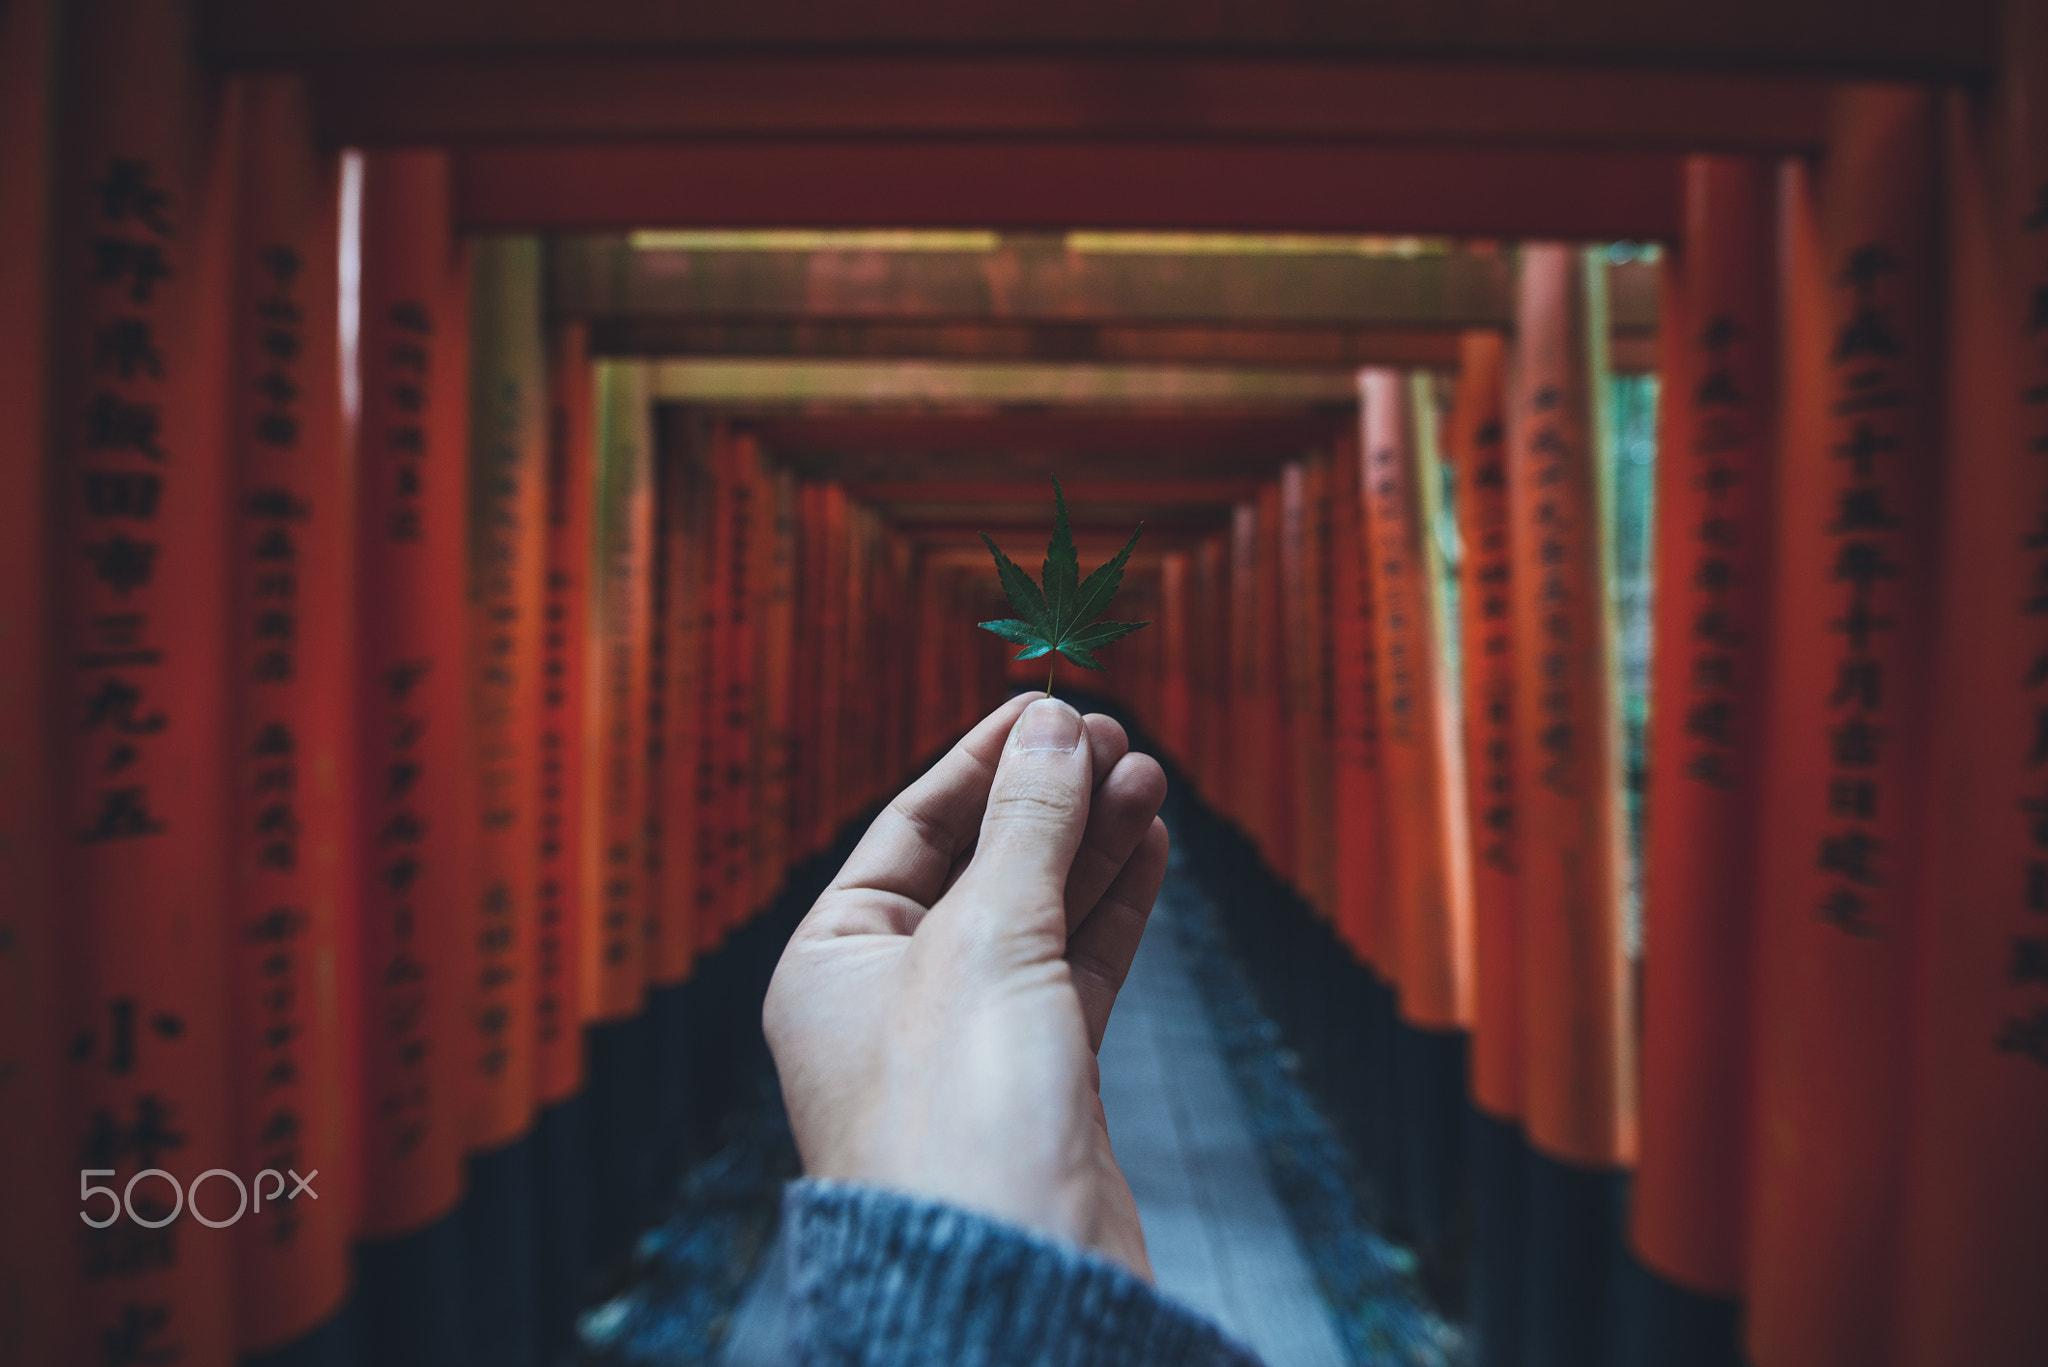 The fushimi-inari path in Kyoto